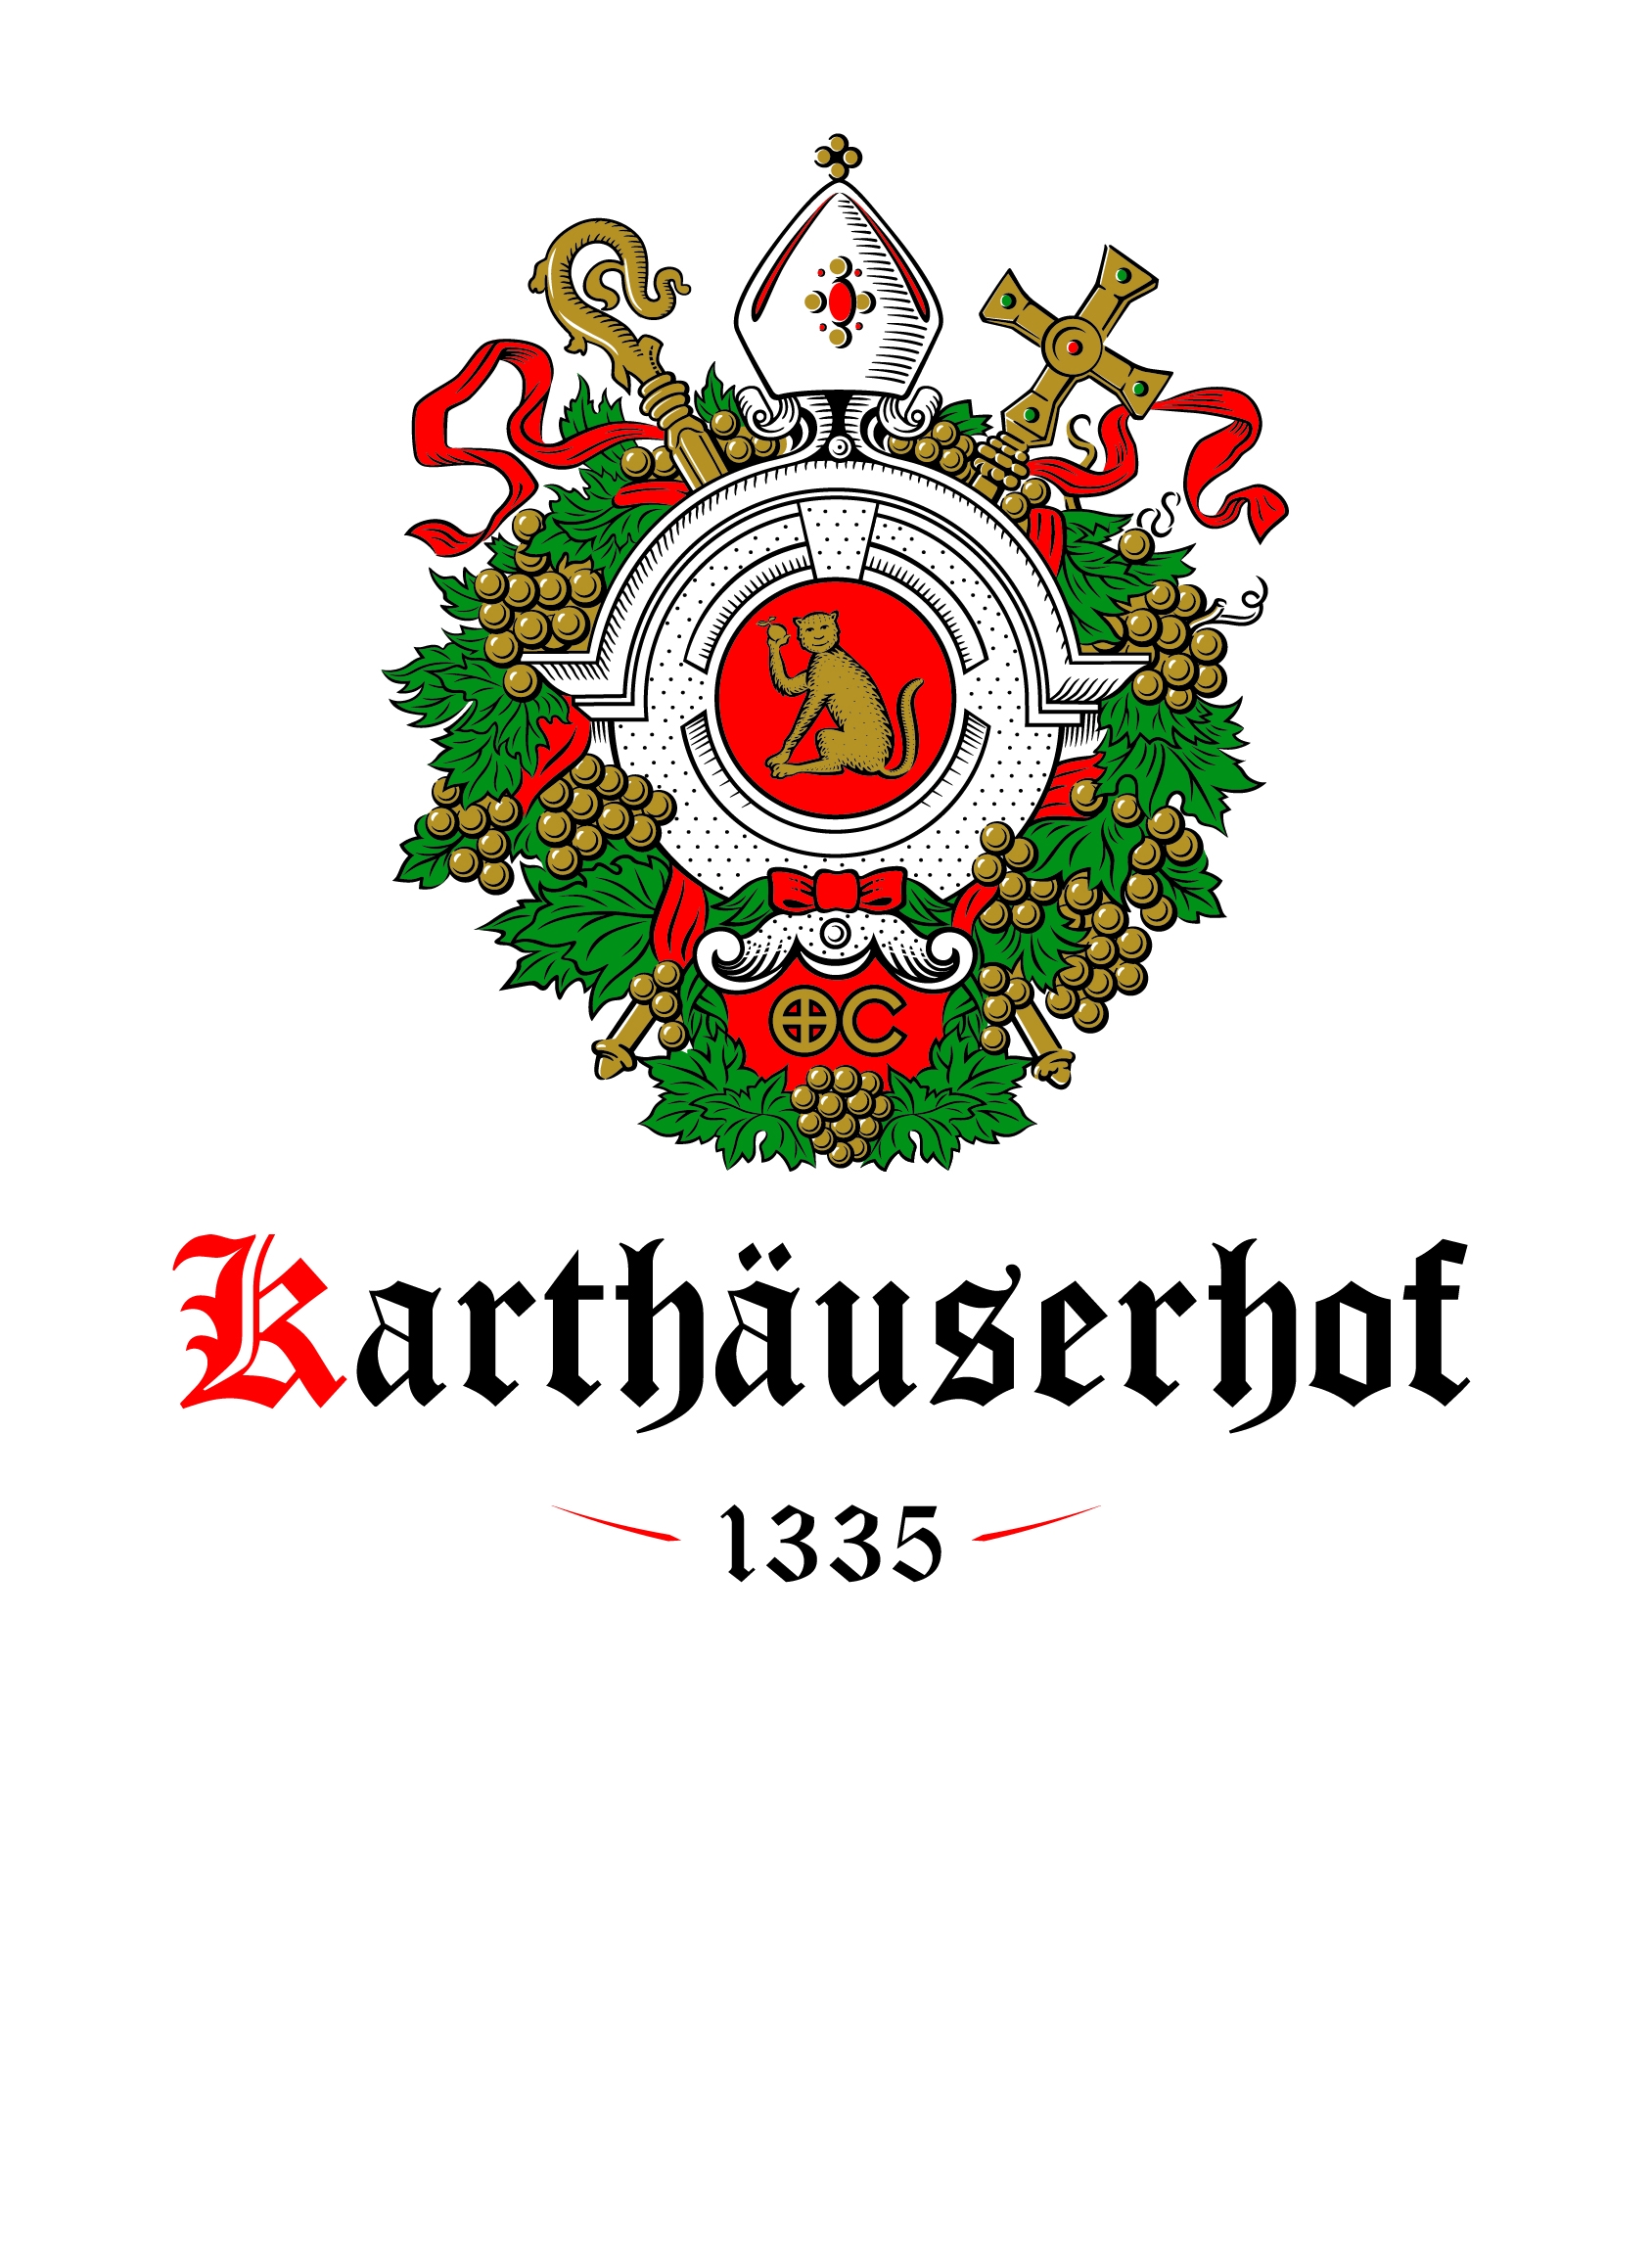 Weingut Karthäuserhof KG